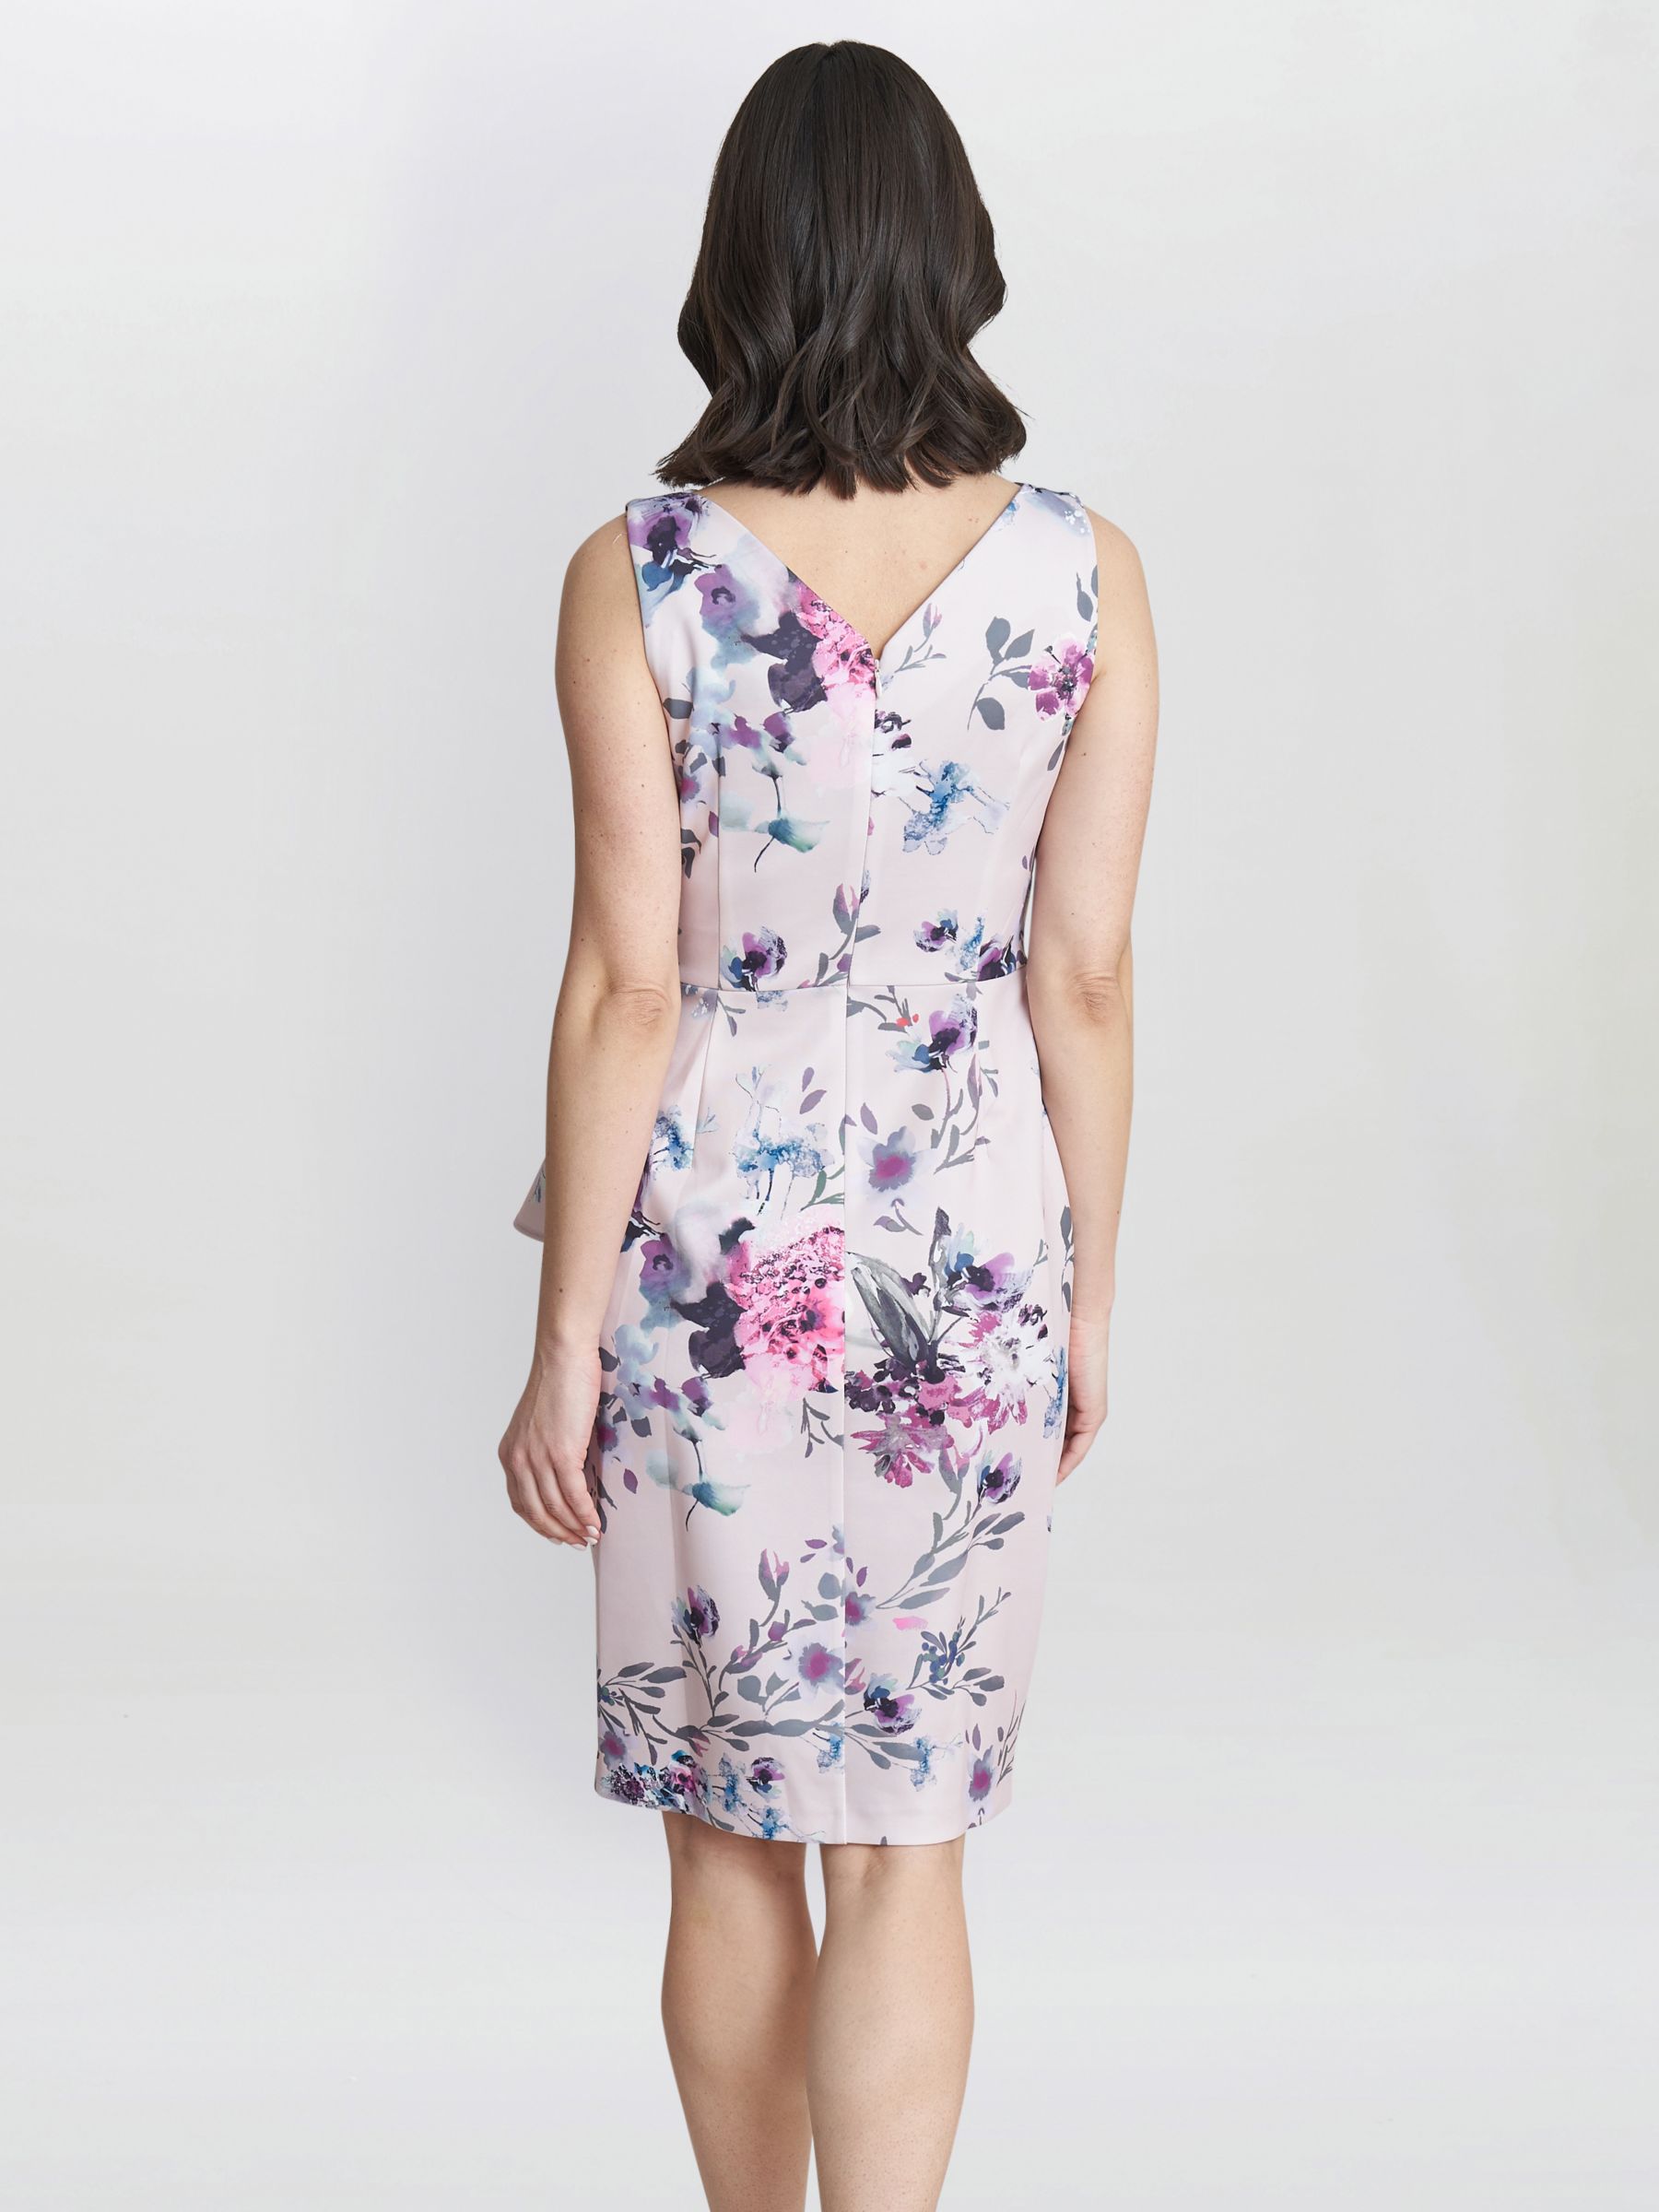 Gina Bacconi Petite Evelina Floral Print Knee Length Dress, Blush/Multi, 12